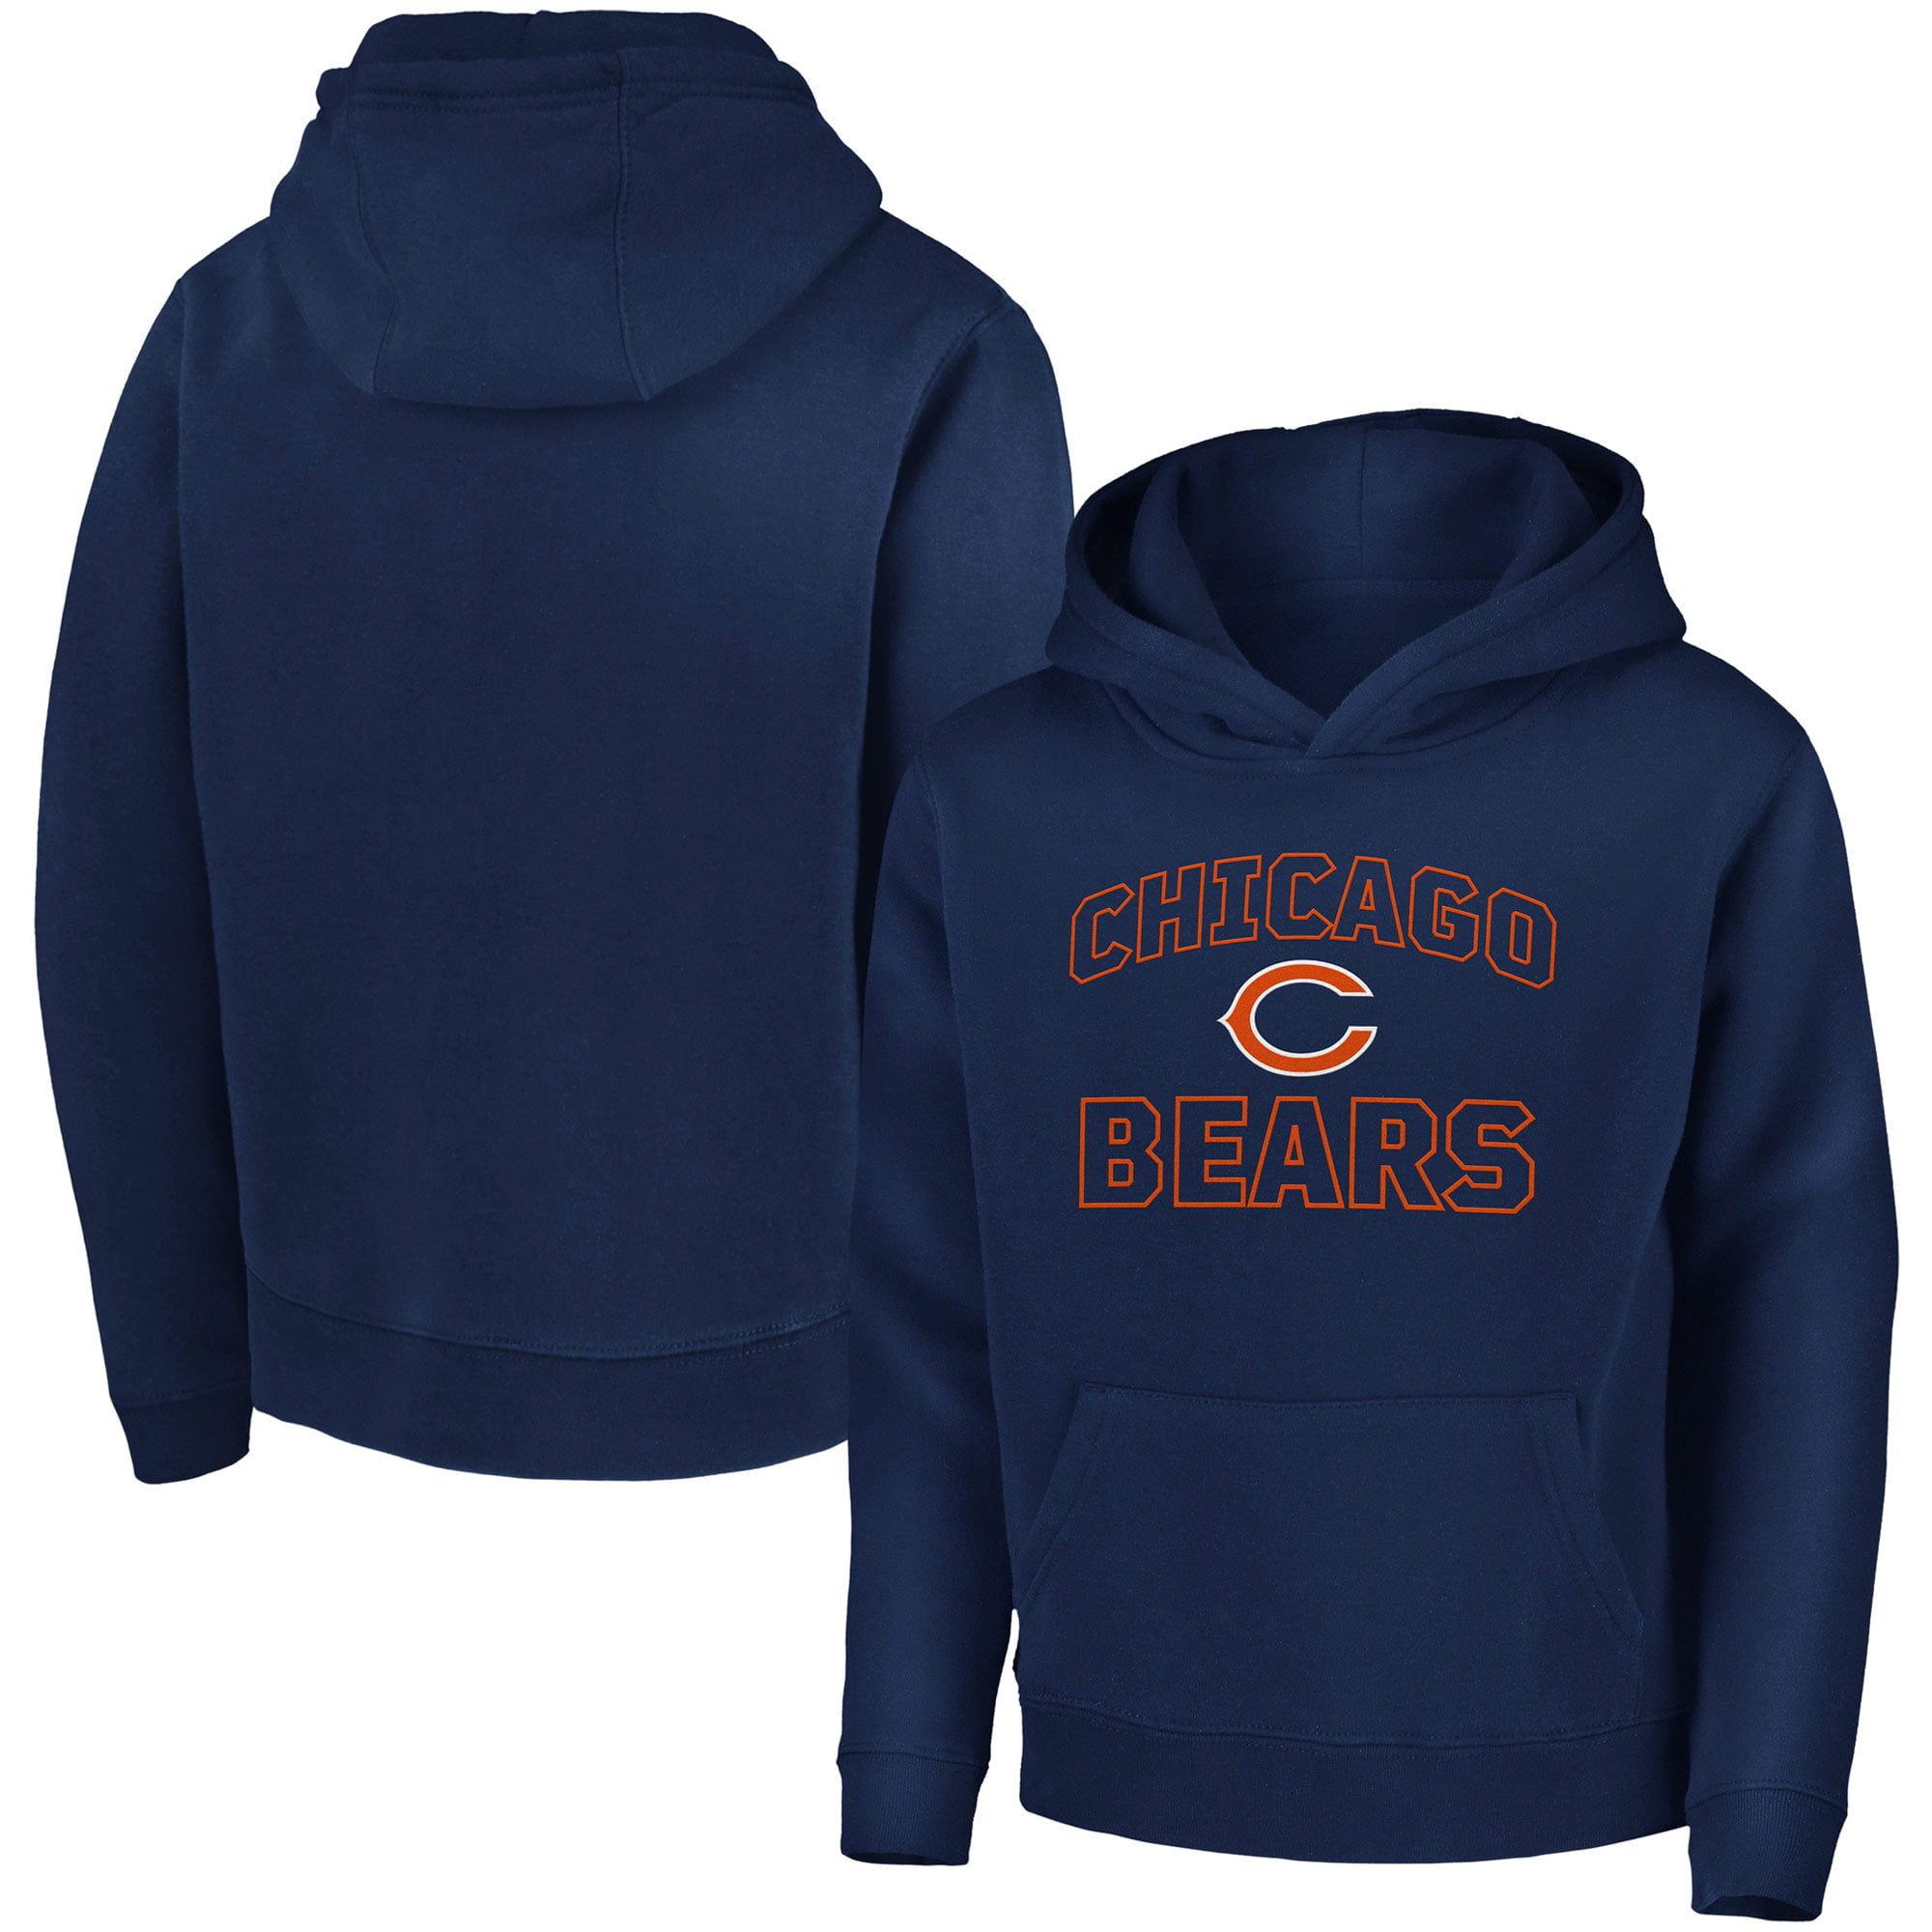 chicago bears youth sweatshirt